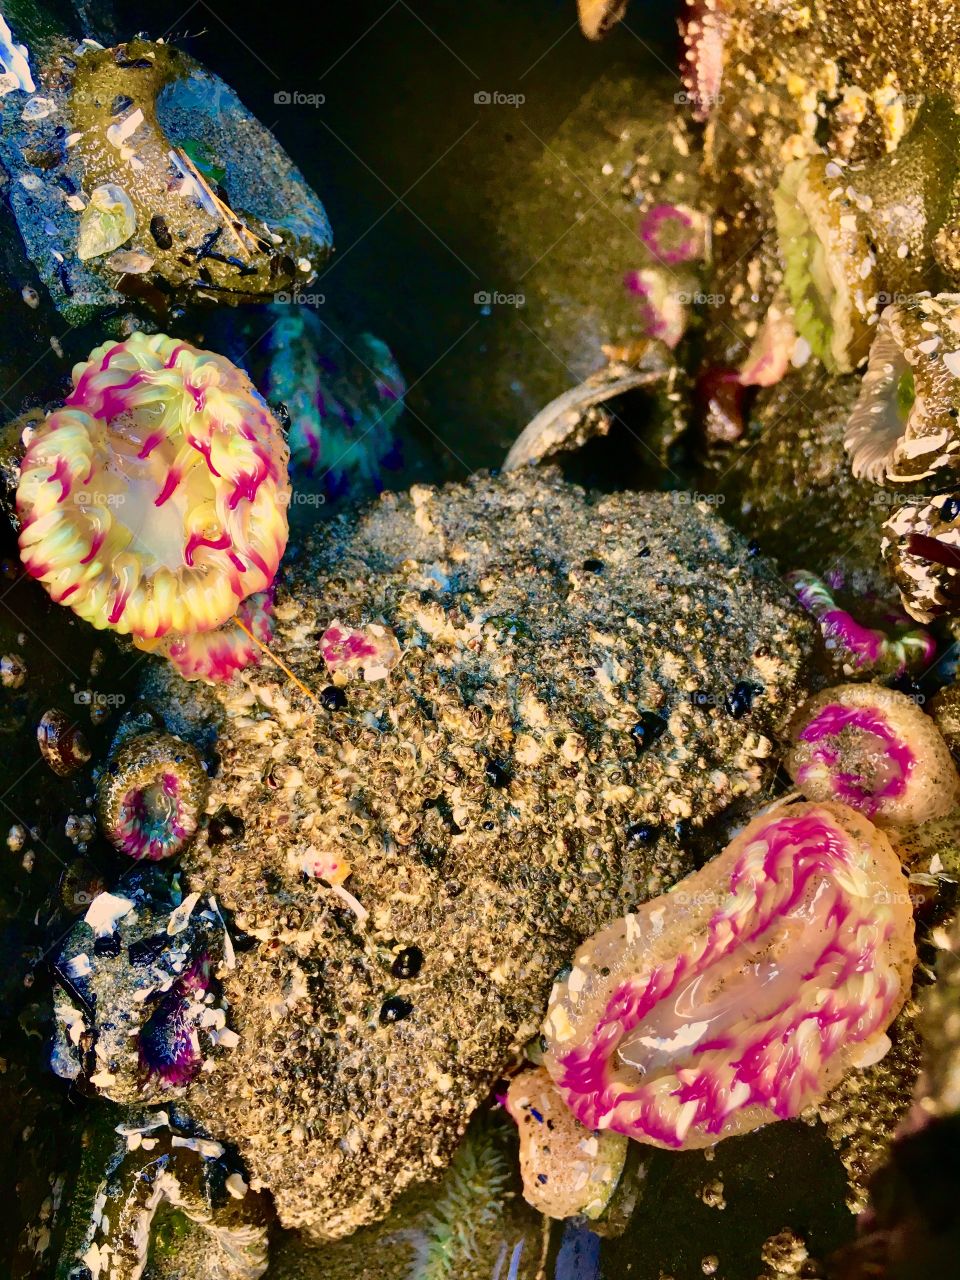 Anemones at low tide